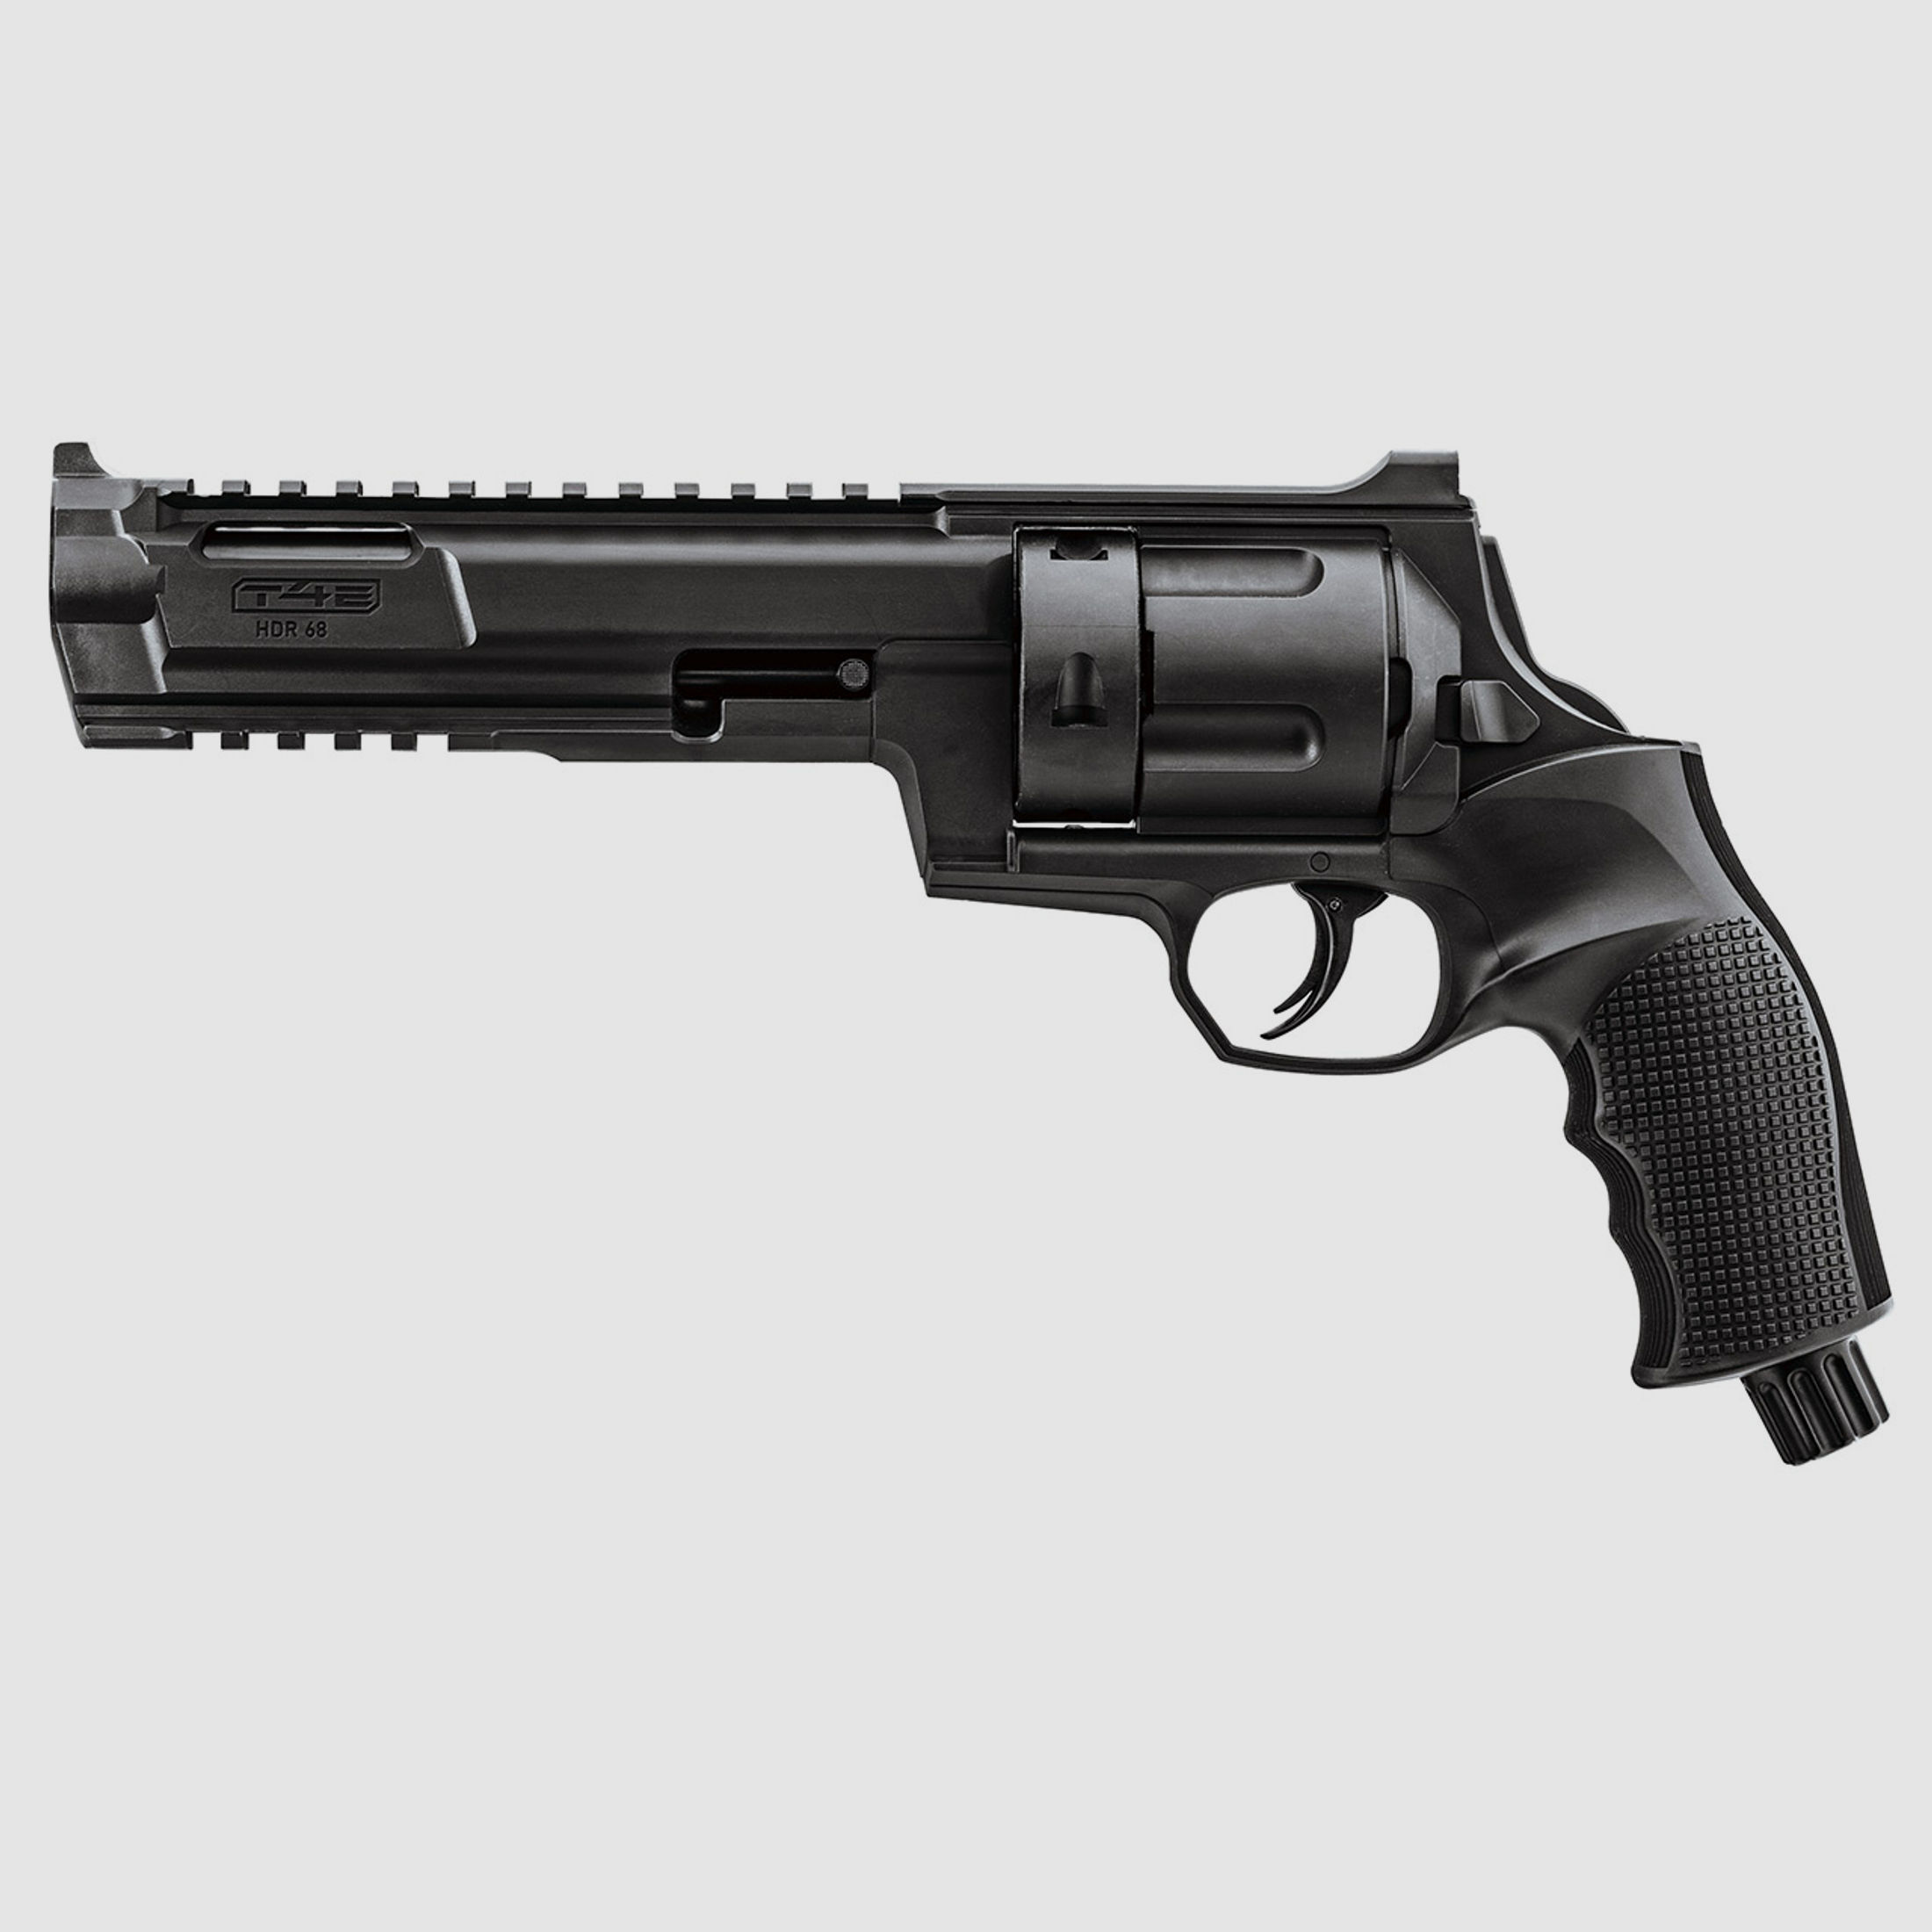 CO2 Markierer Home Defense Revolver Umarex T4E HDR 68 fĂĽr Gummi-, Pfeffer- und Farbkugeln Kaliber .68 (P18)